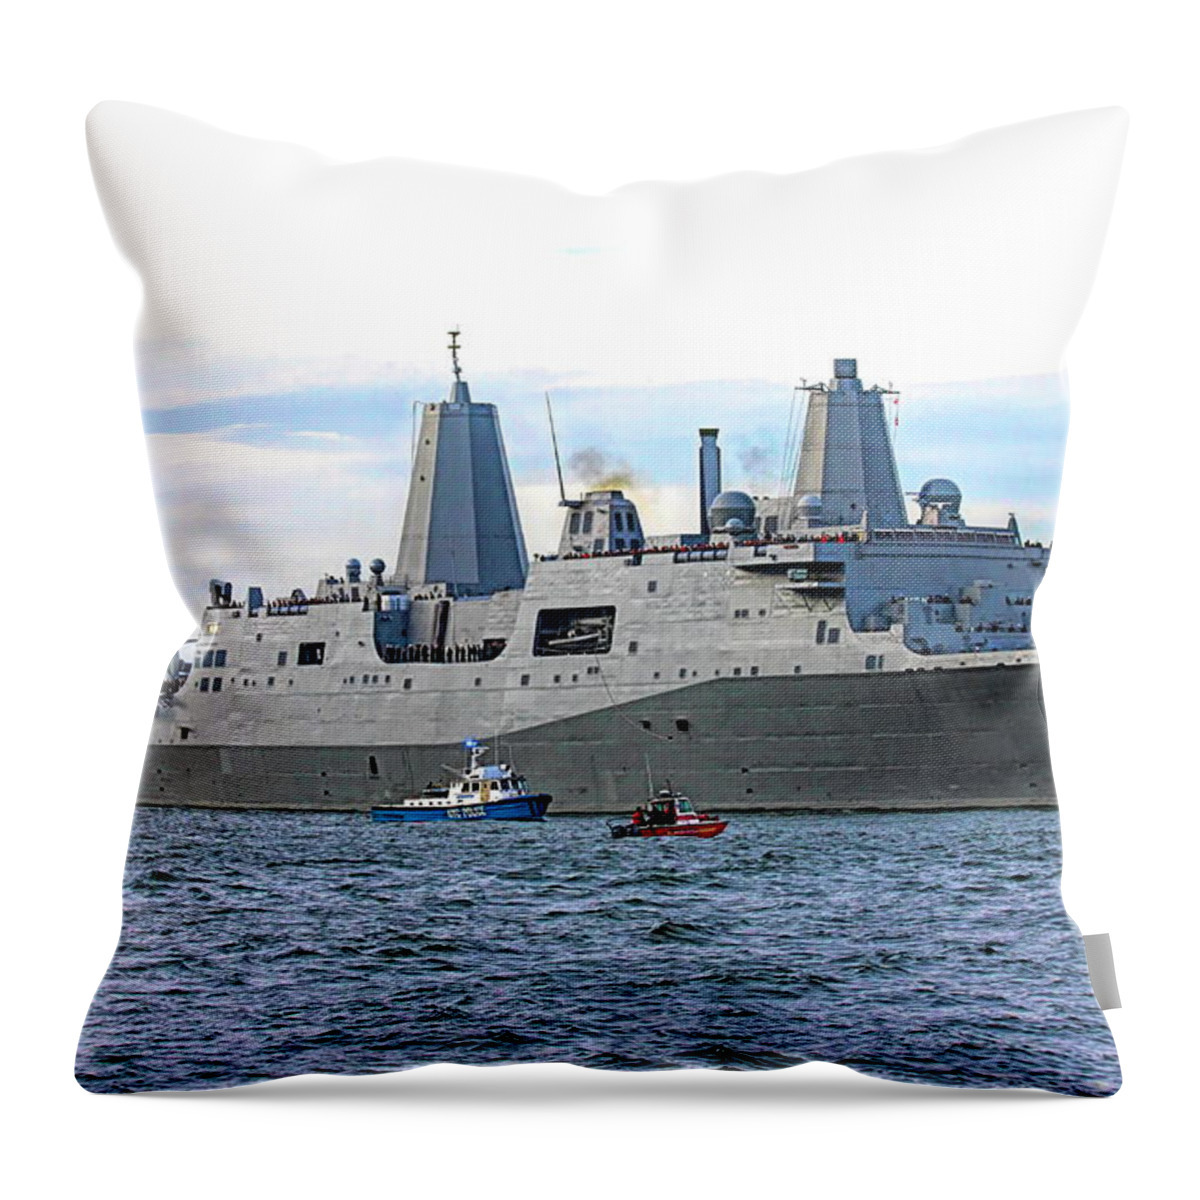 Us Navel Vessel Throw Pillow featuring the photograph USS New York by Bob Kopprasch